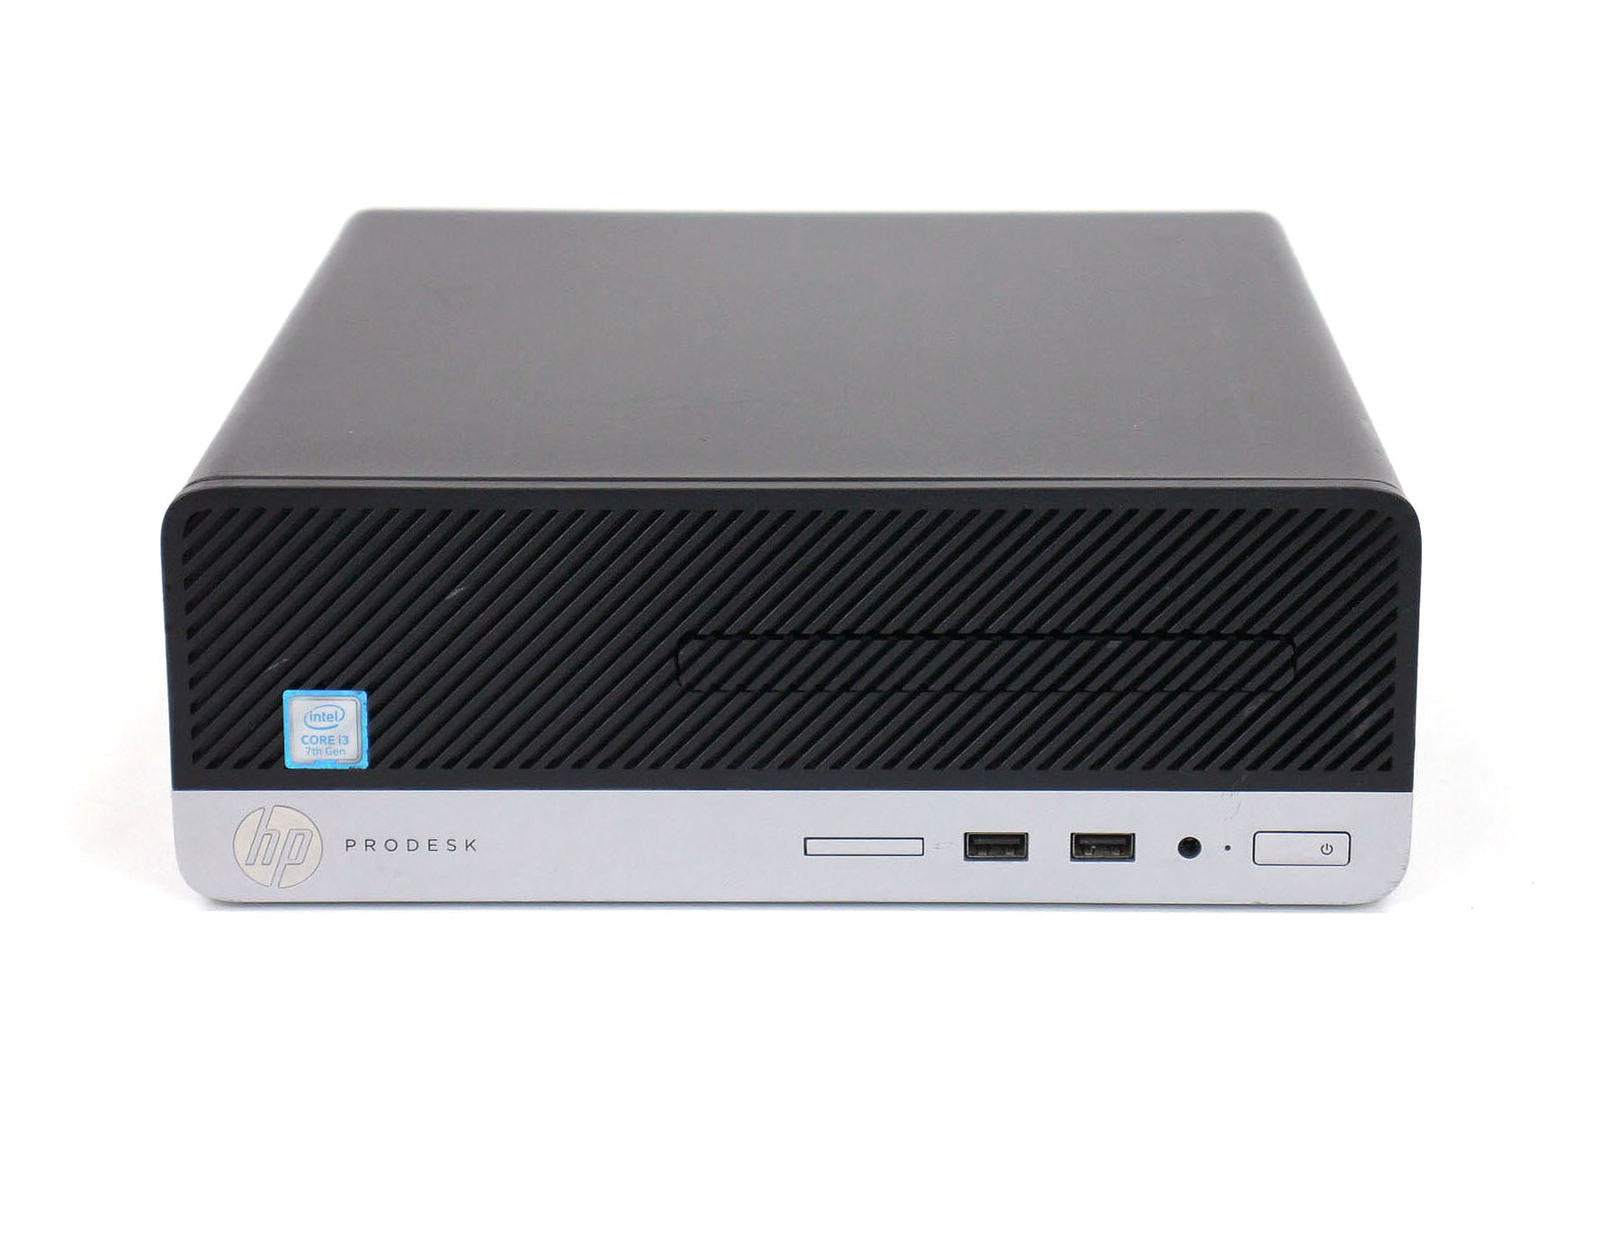 PC BUREAU COMPLET HP 400G4 MT i3-7100 4GB 500GB FreeDos+Ecran 20,7 - Tabtel